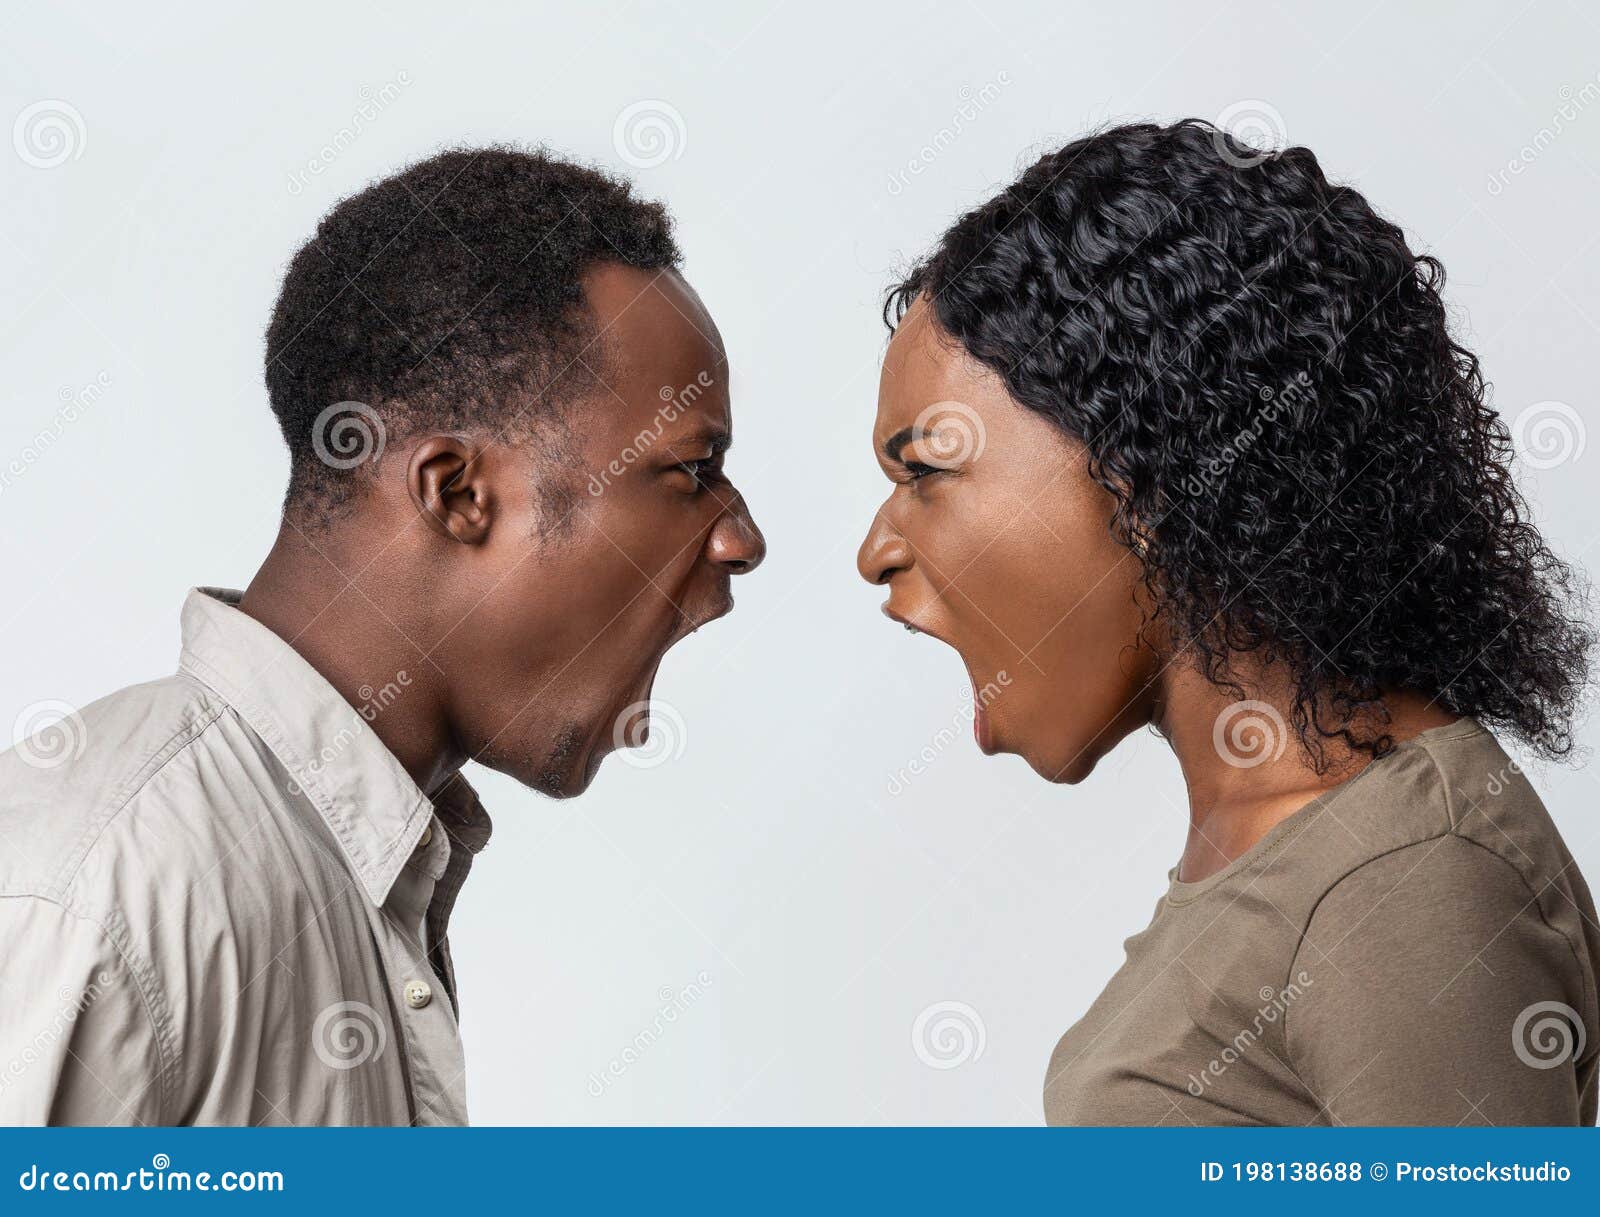 African american women dating african men